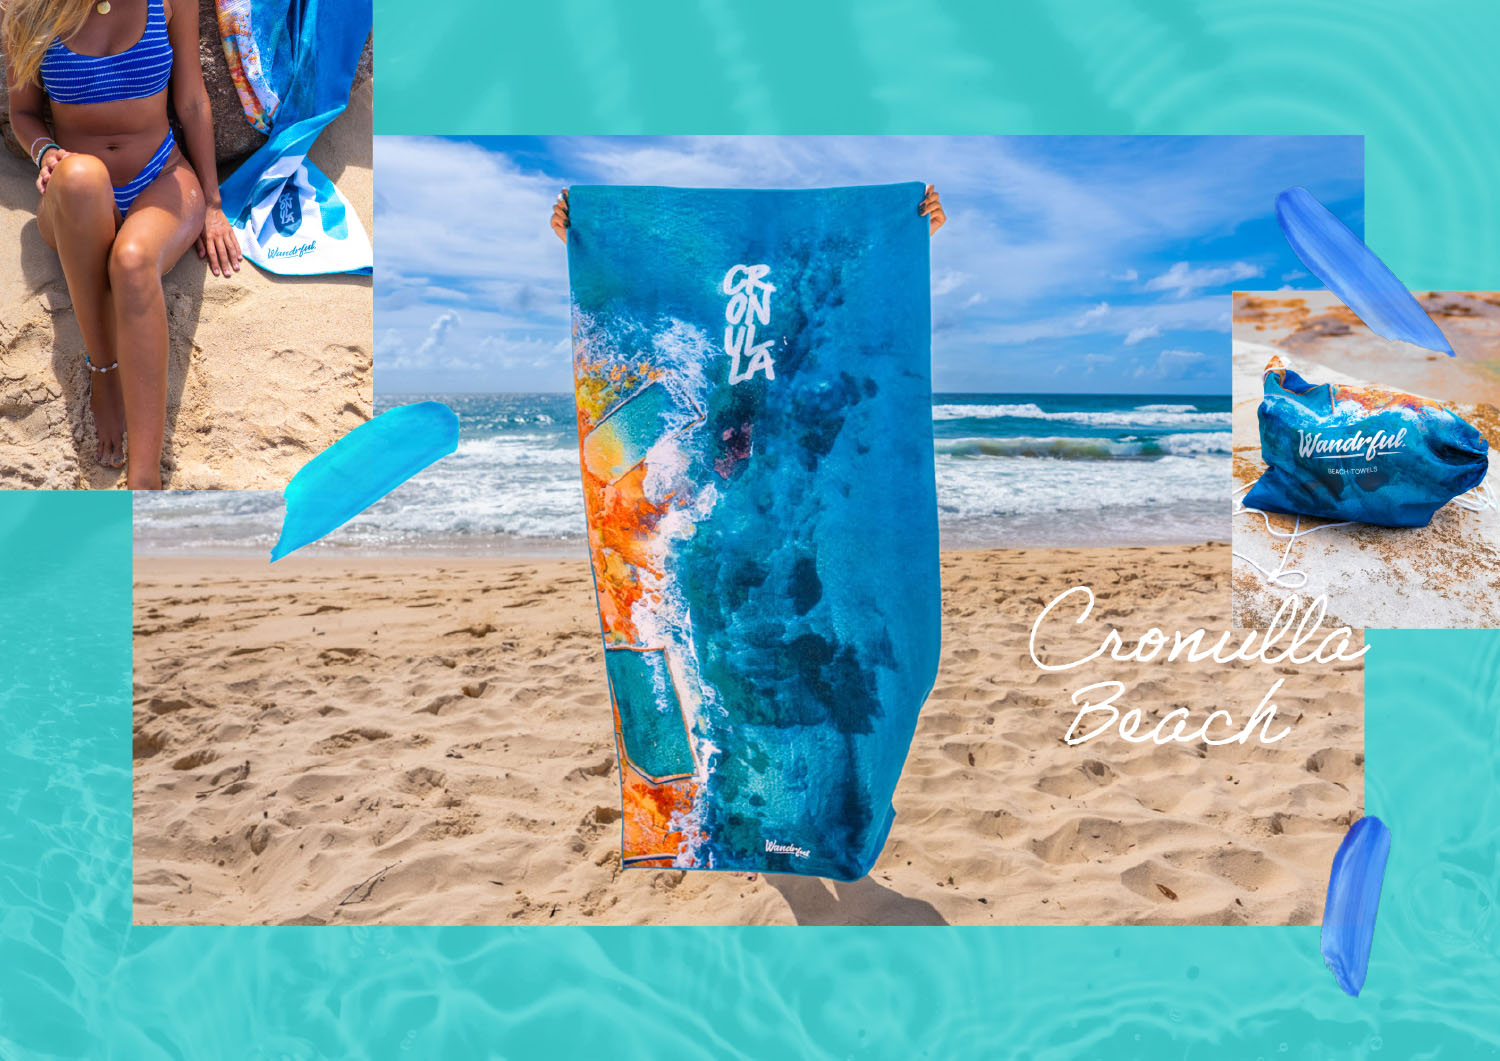 Wandrful sand-free beach towels at Cronulla Beach. Model using sand-free beach towel.